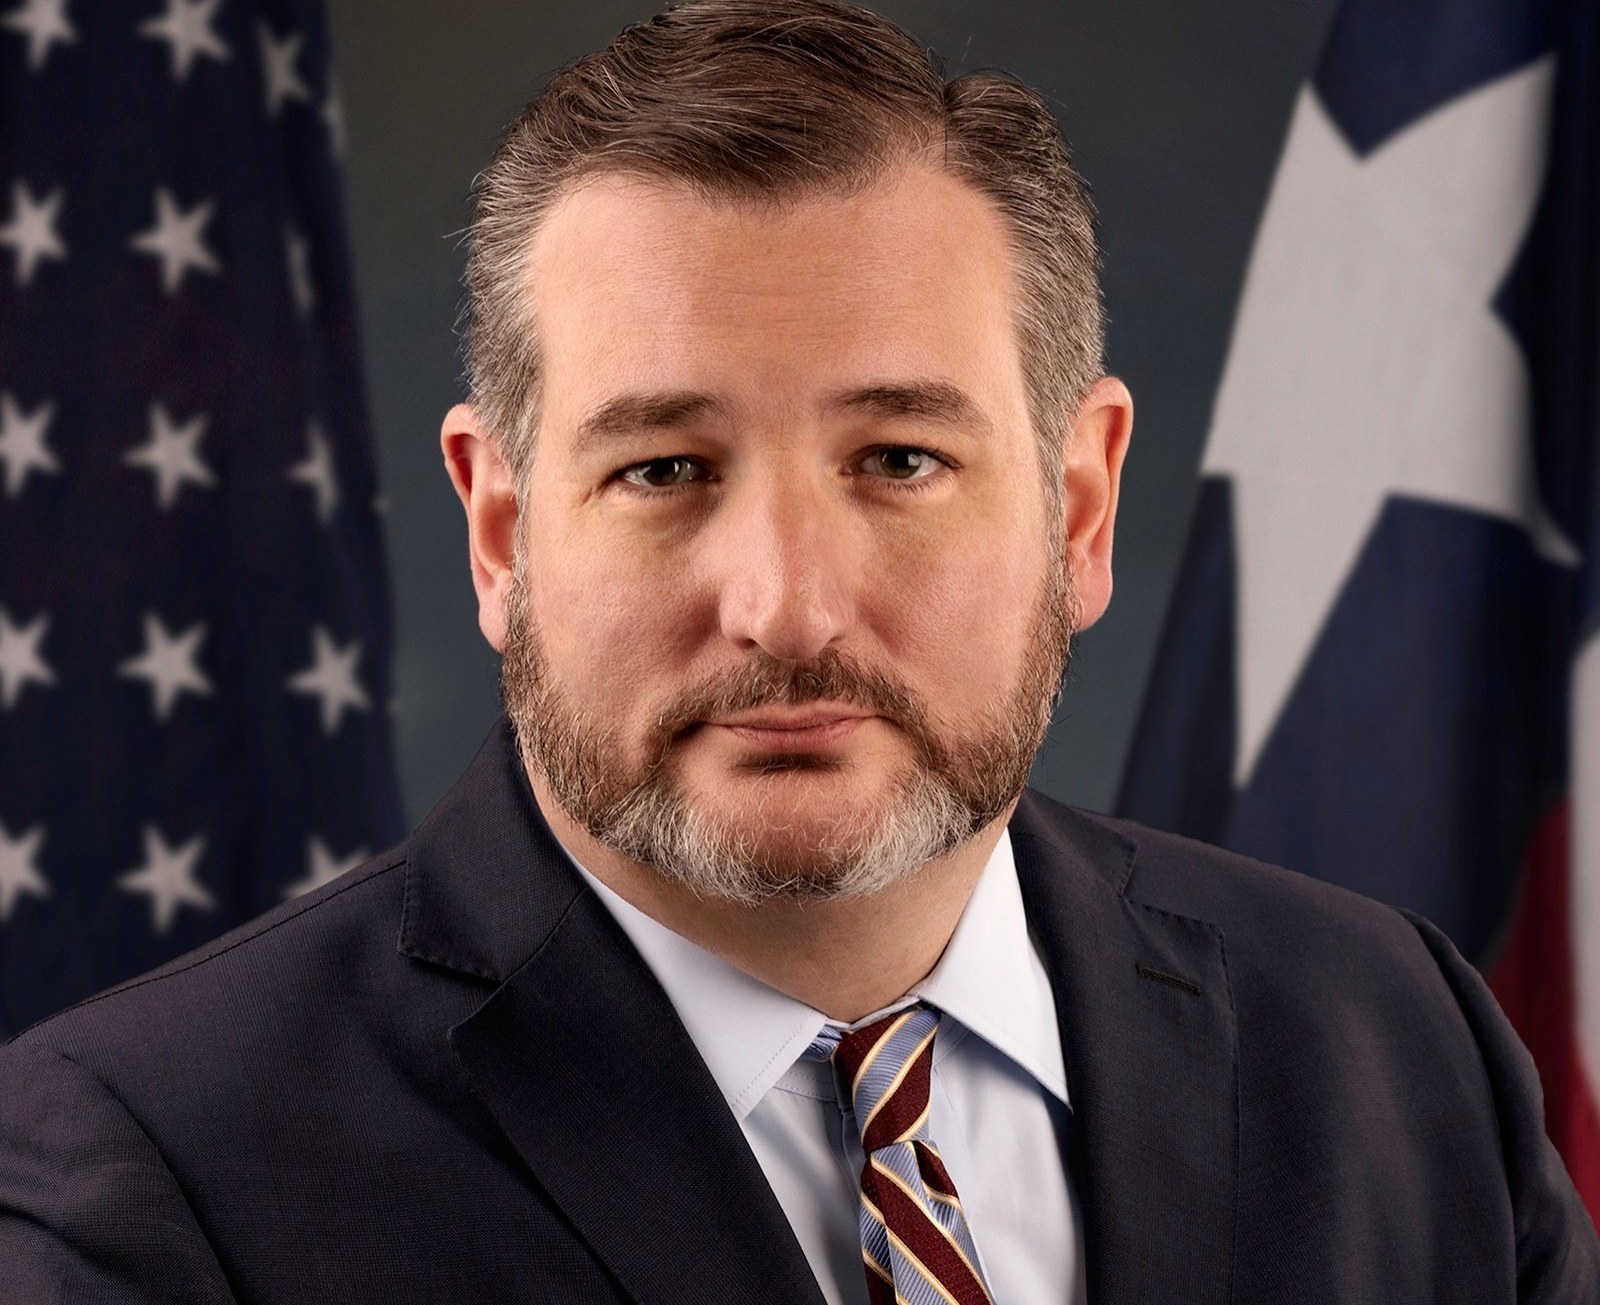 Sen. Ted Cruz (R-Texas) official portrait